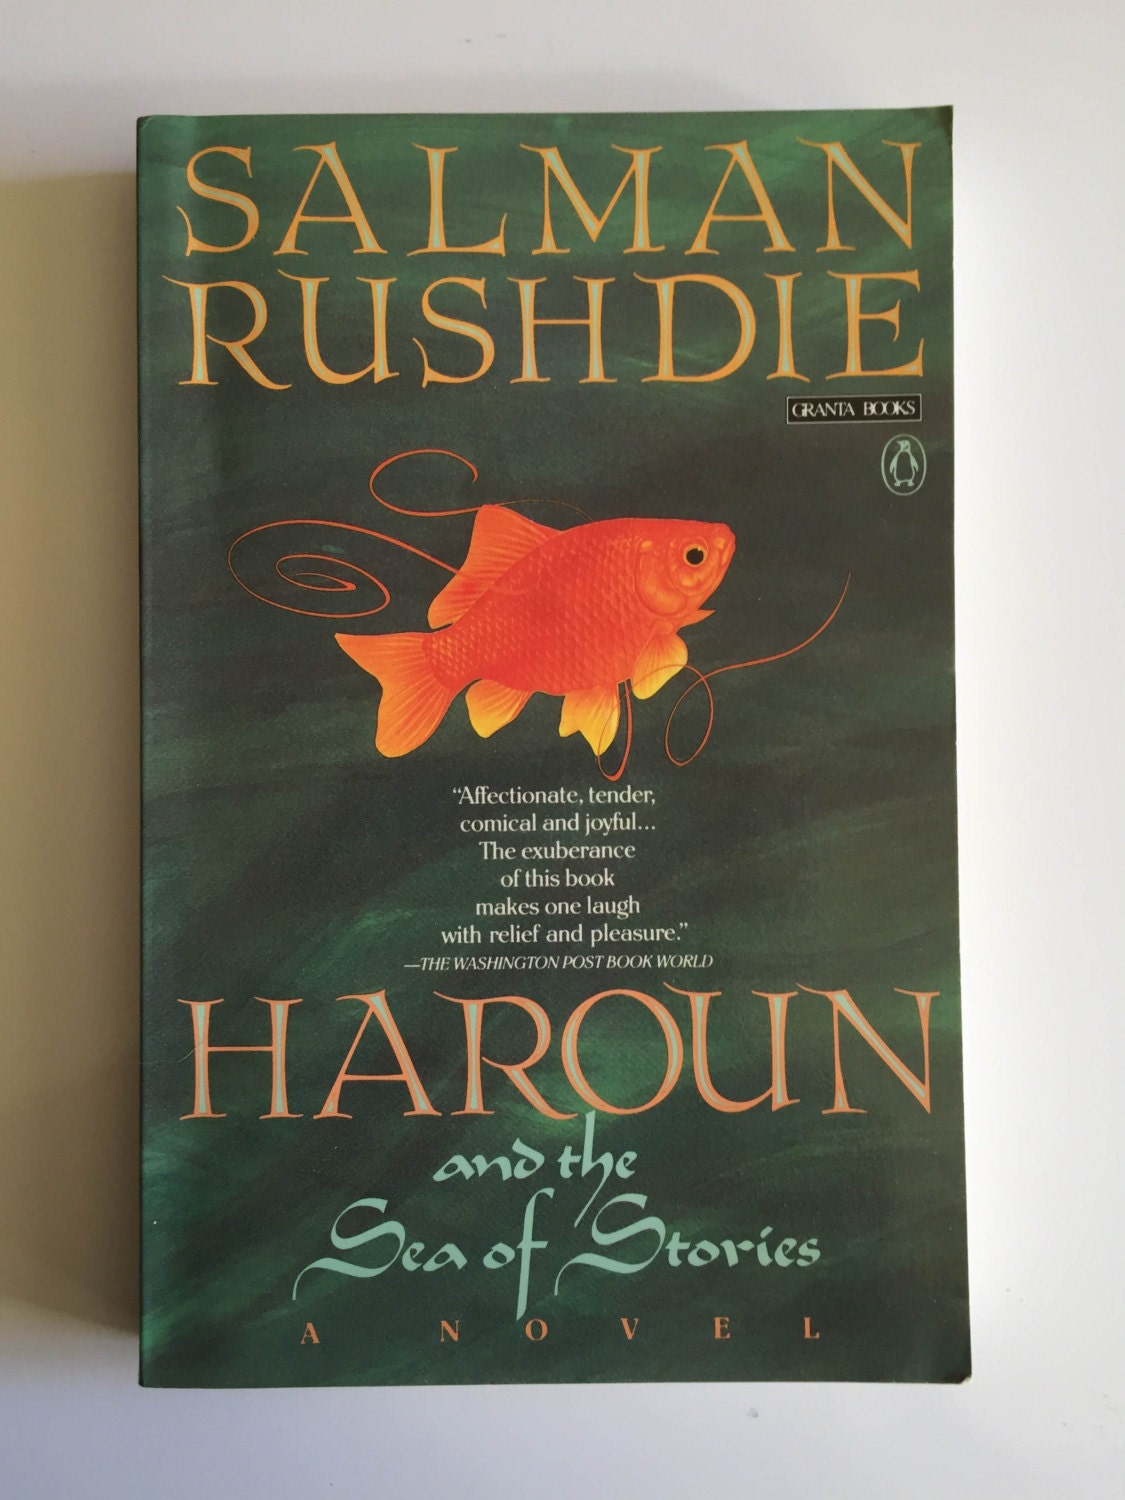 salman rushdie book haroun and the sea of stories